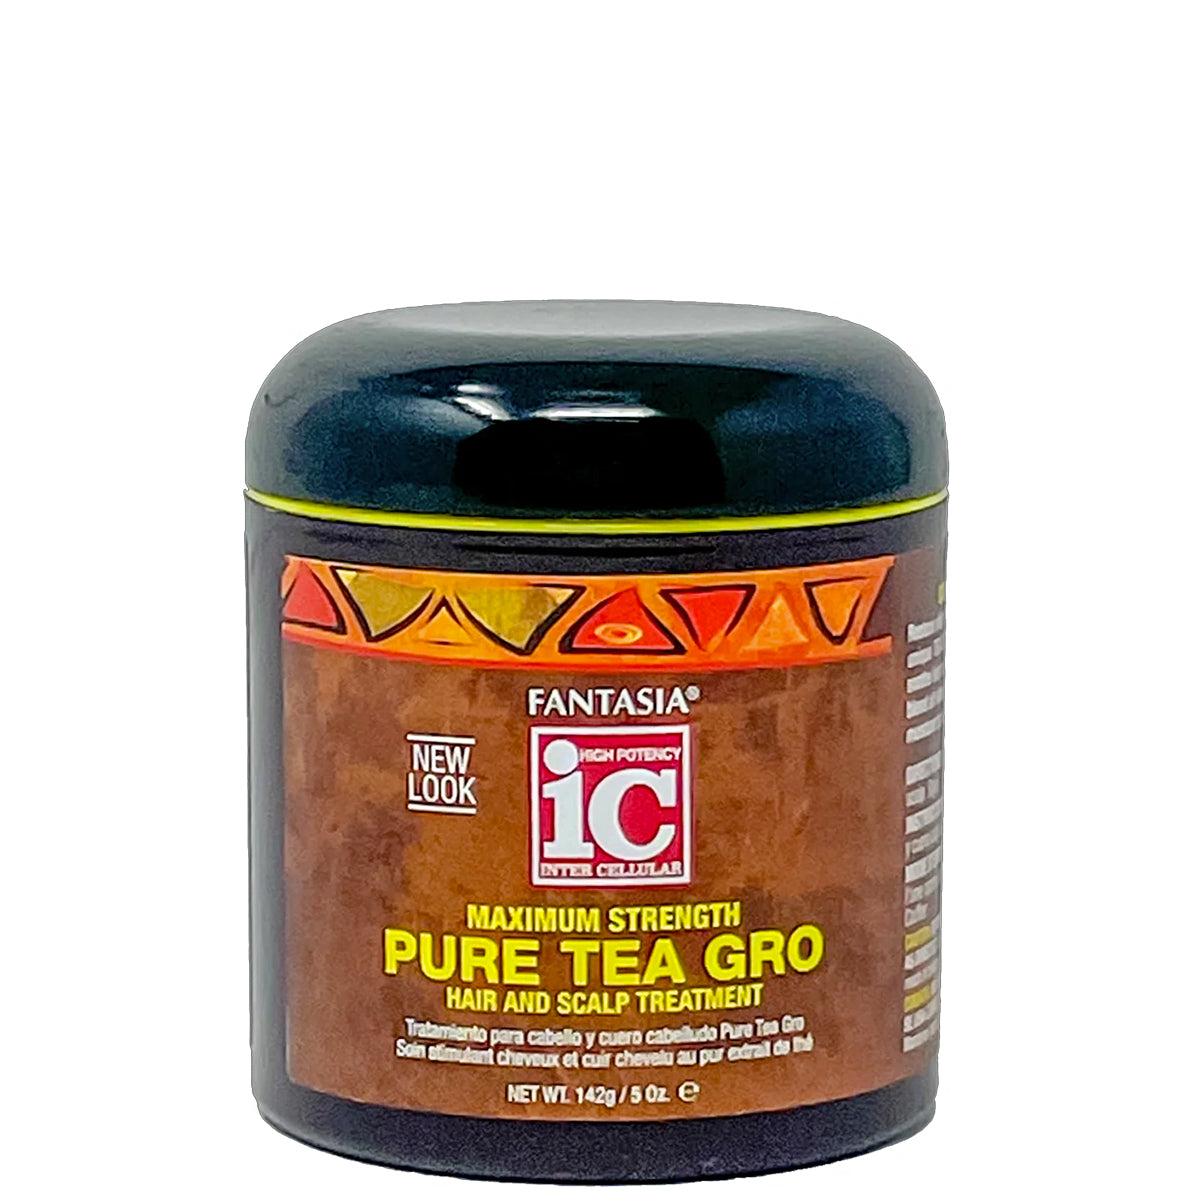 Fantasia IC Pure Tea Gro Hair and Scalp Treatment 5oz